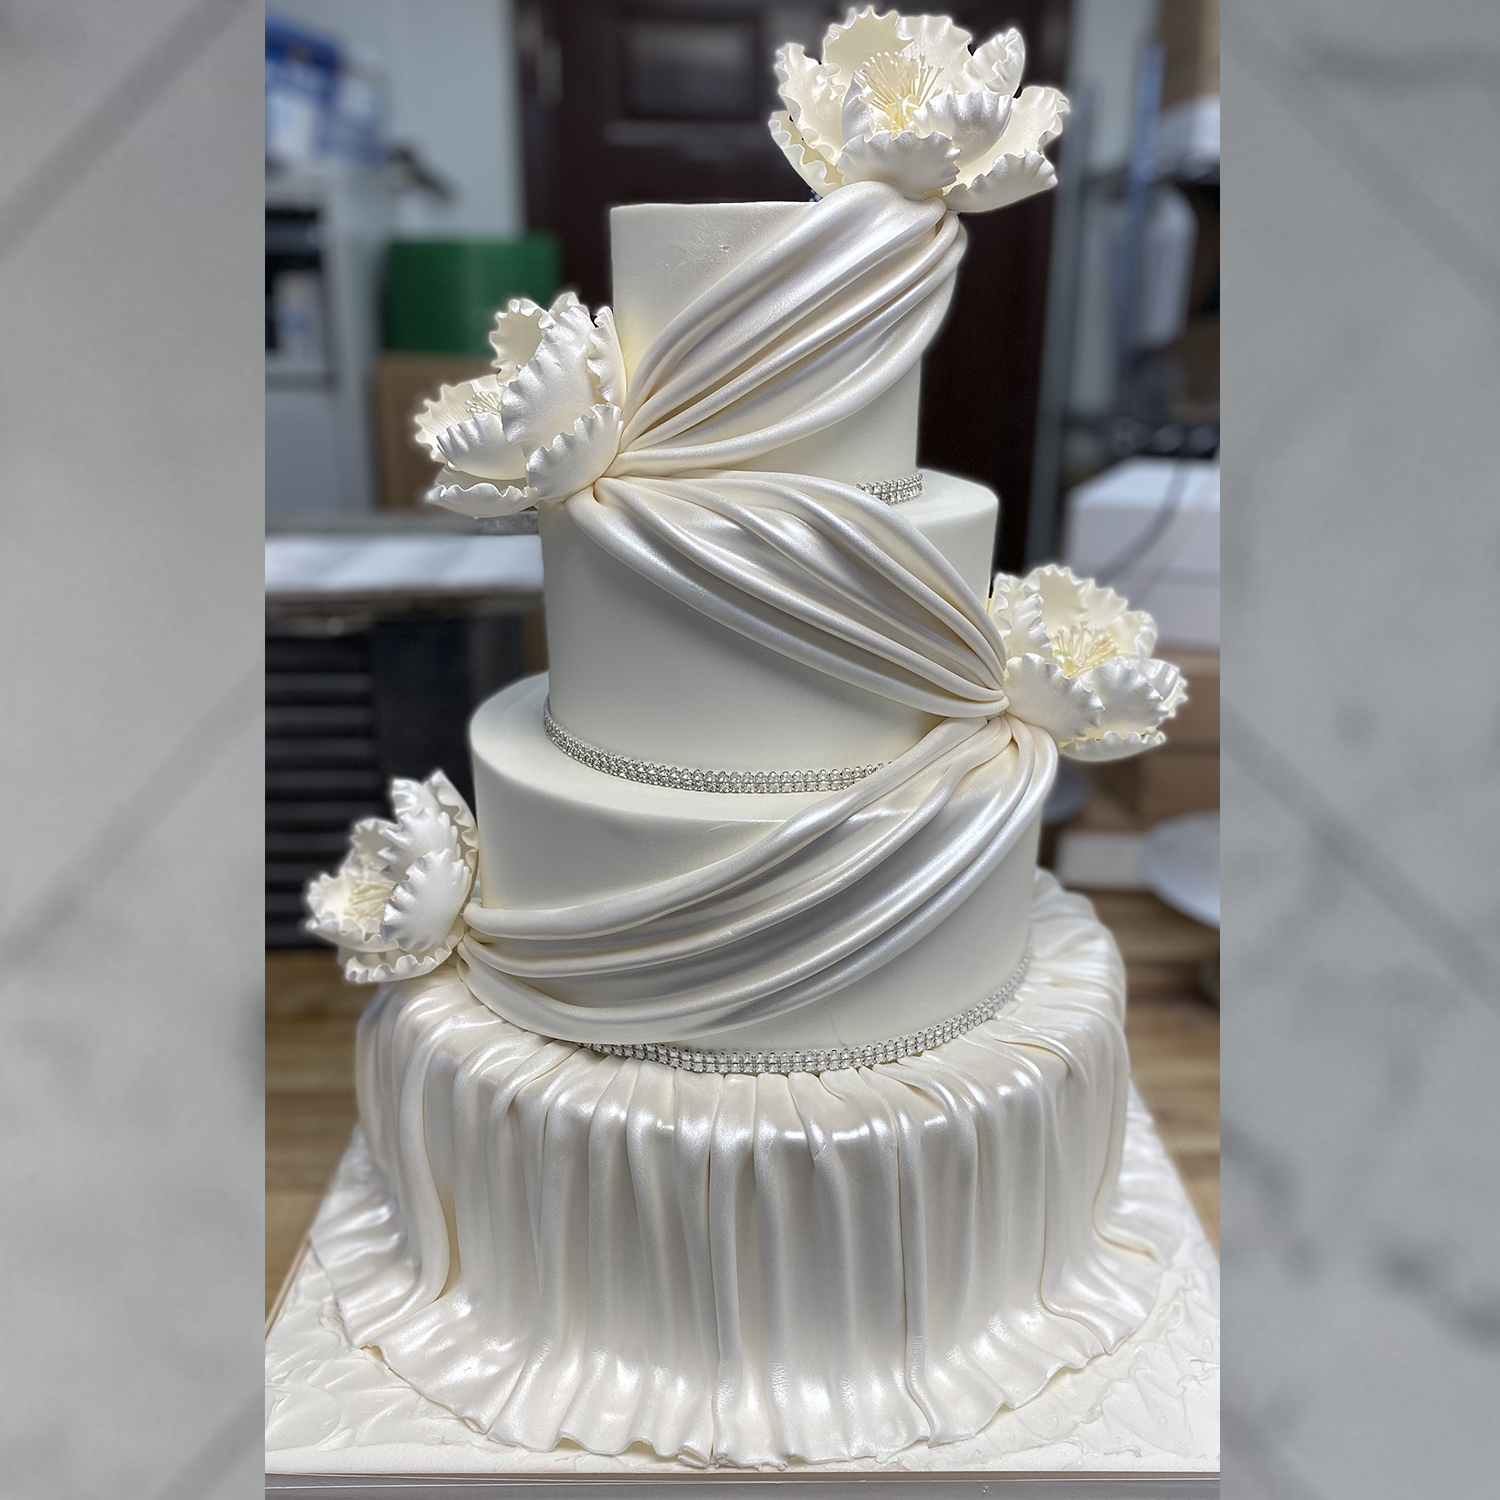 Exquisite Draping Wedding Cake